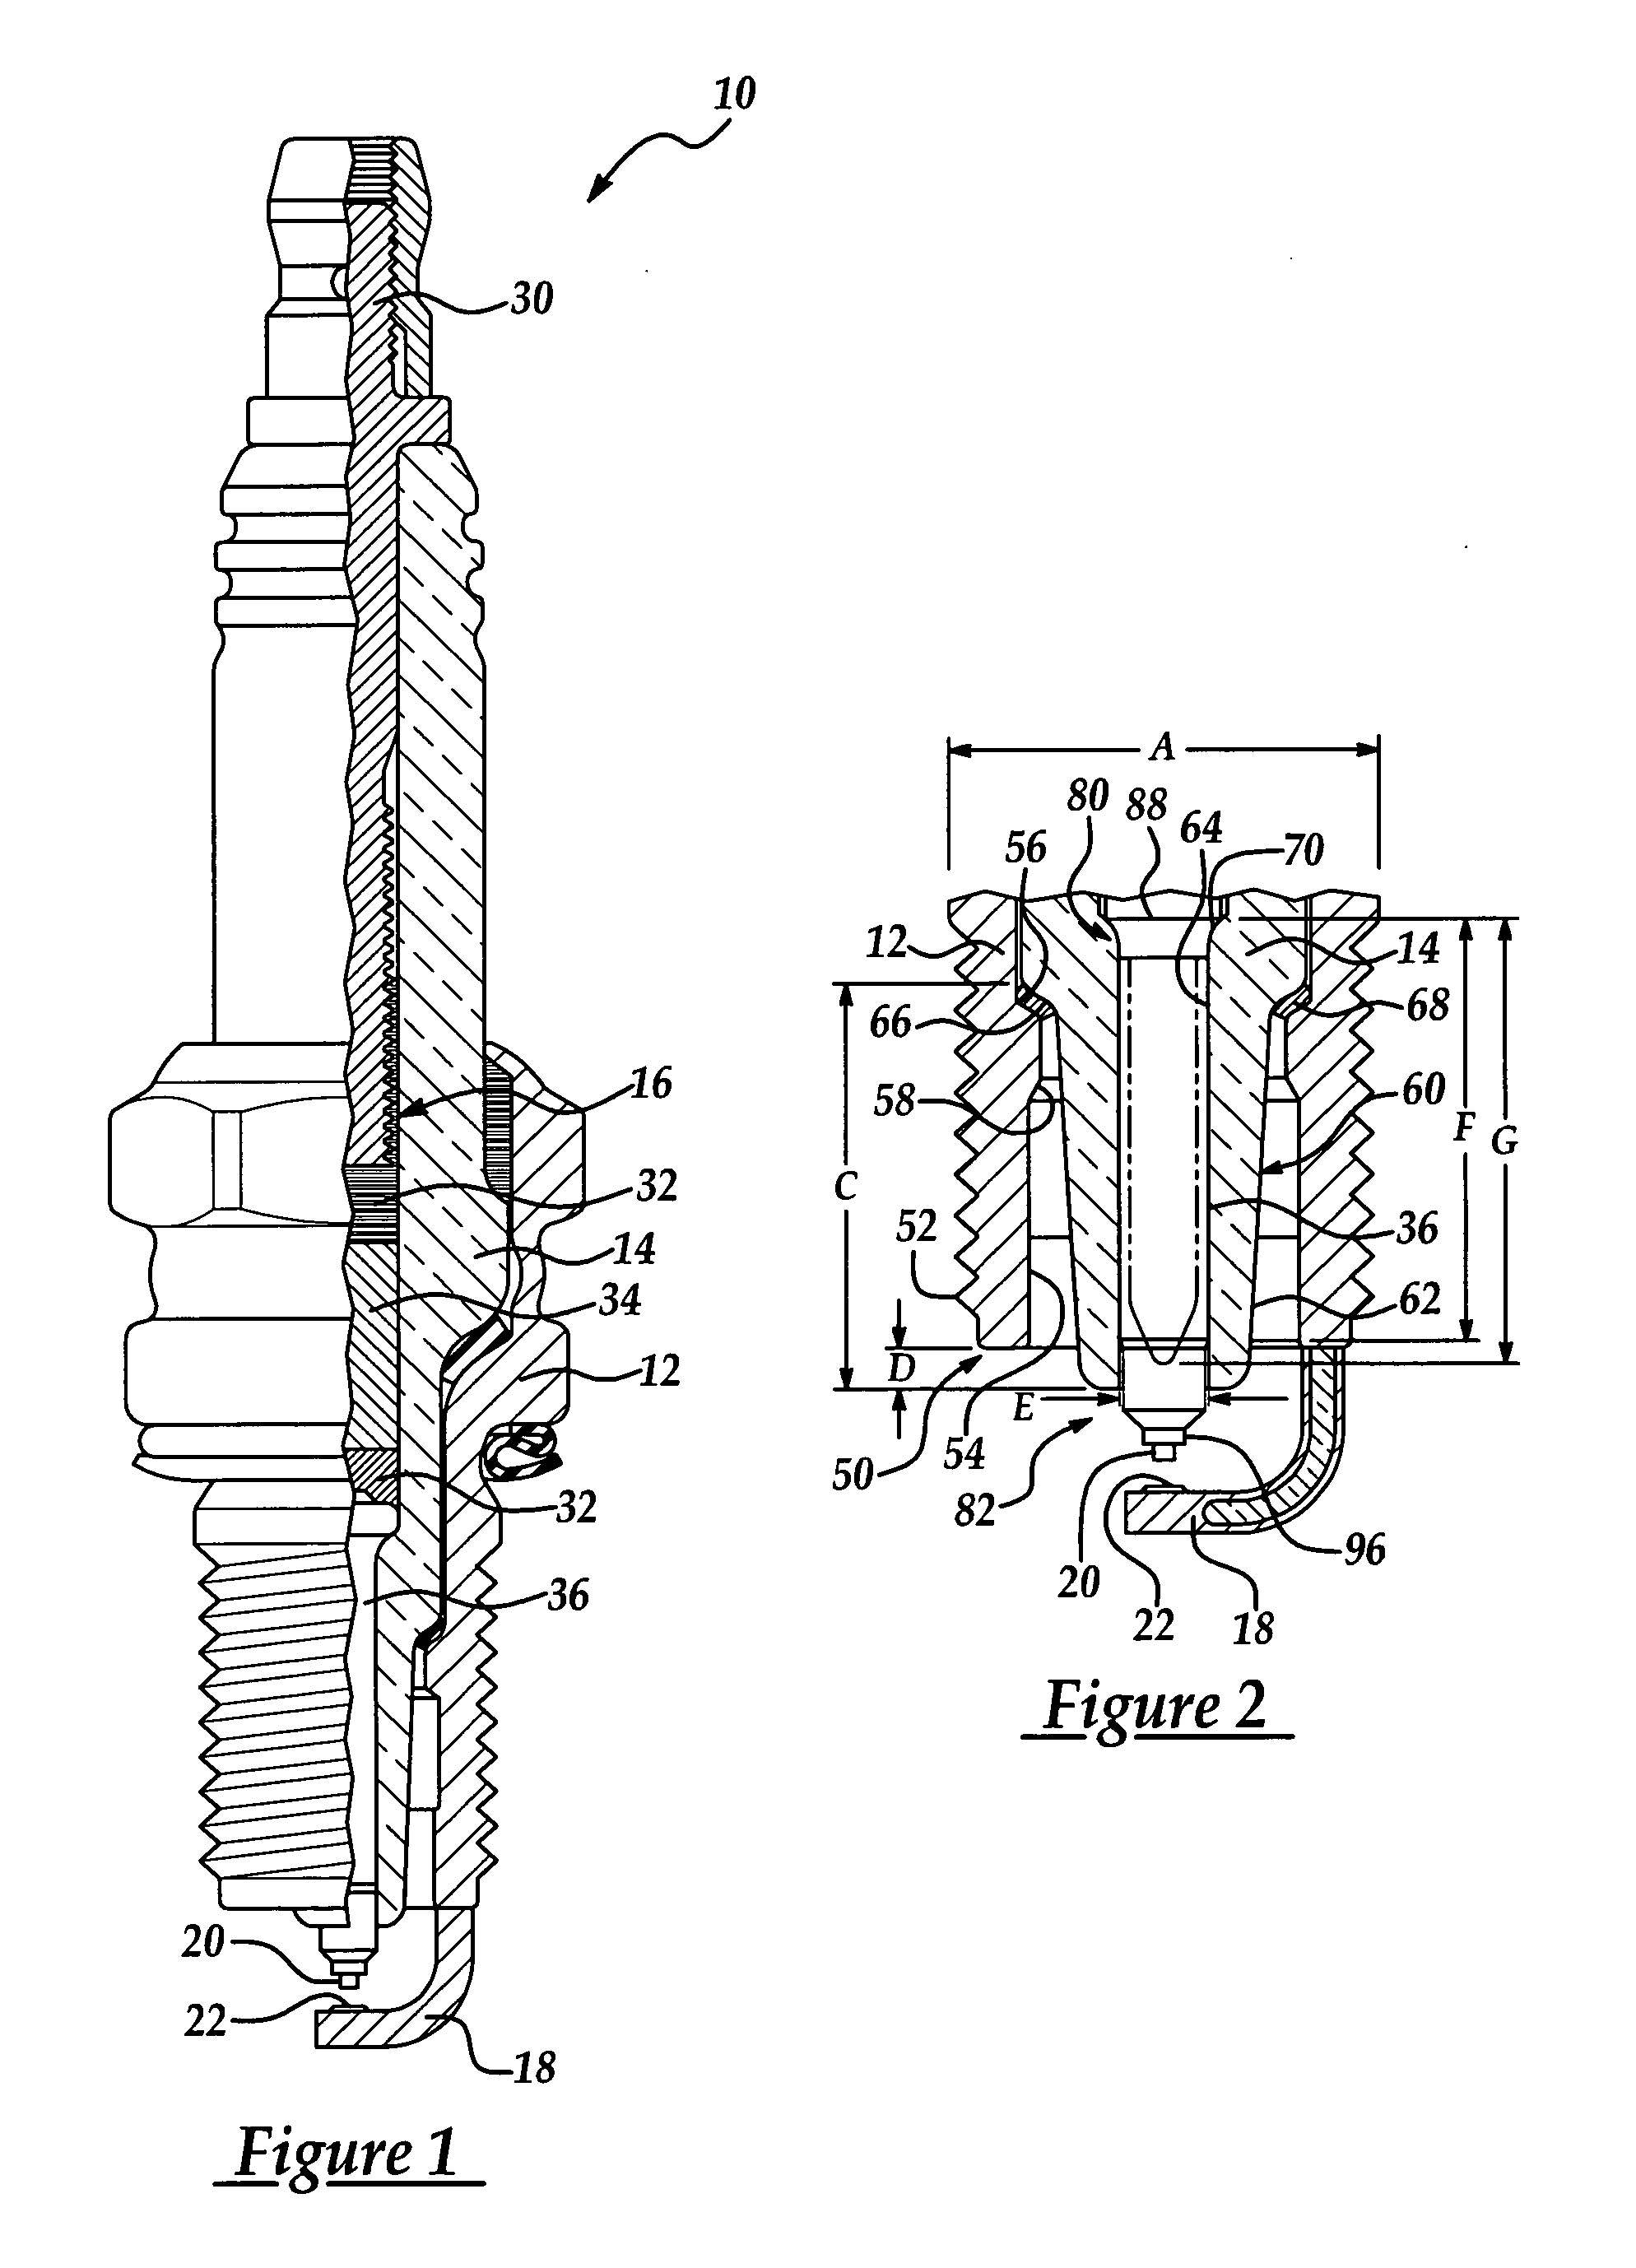 Spark plug configuration having a metal noble tip